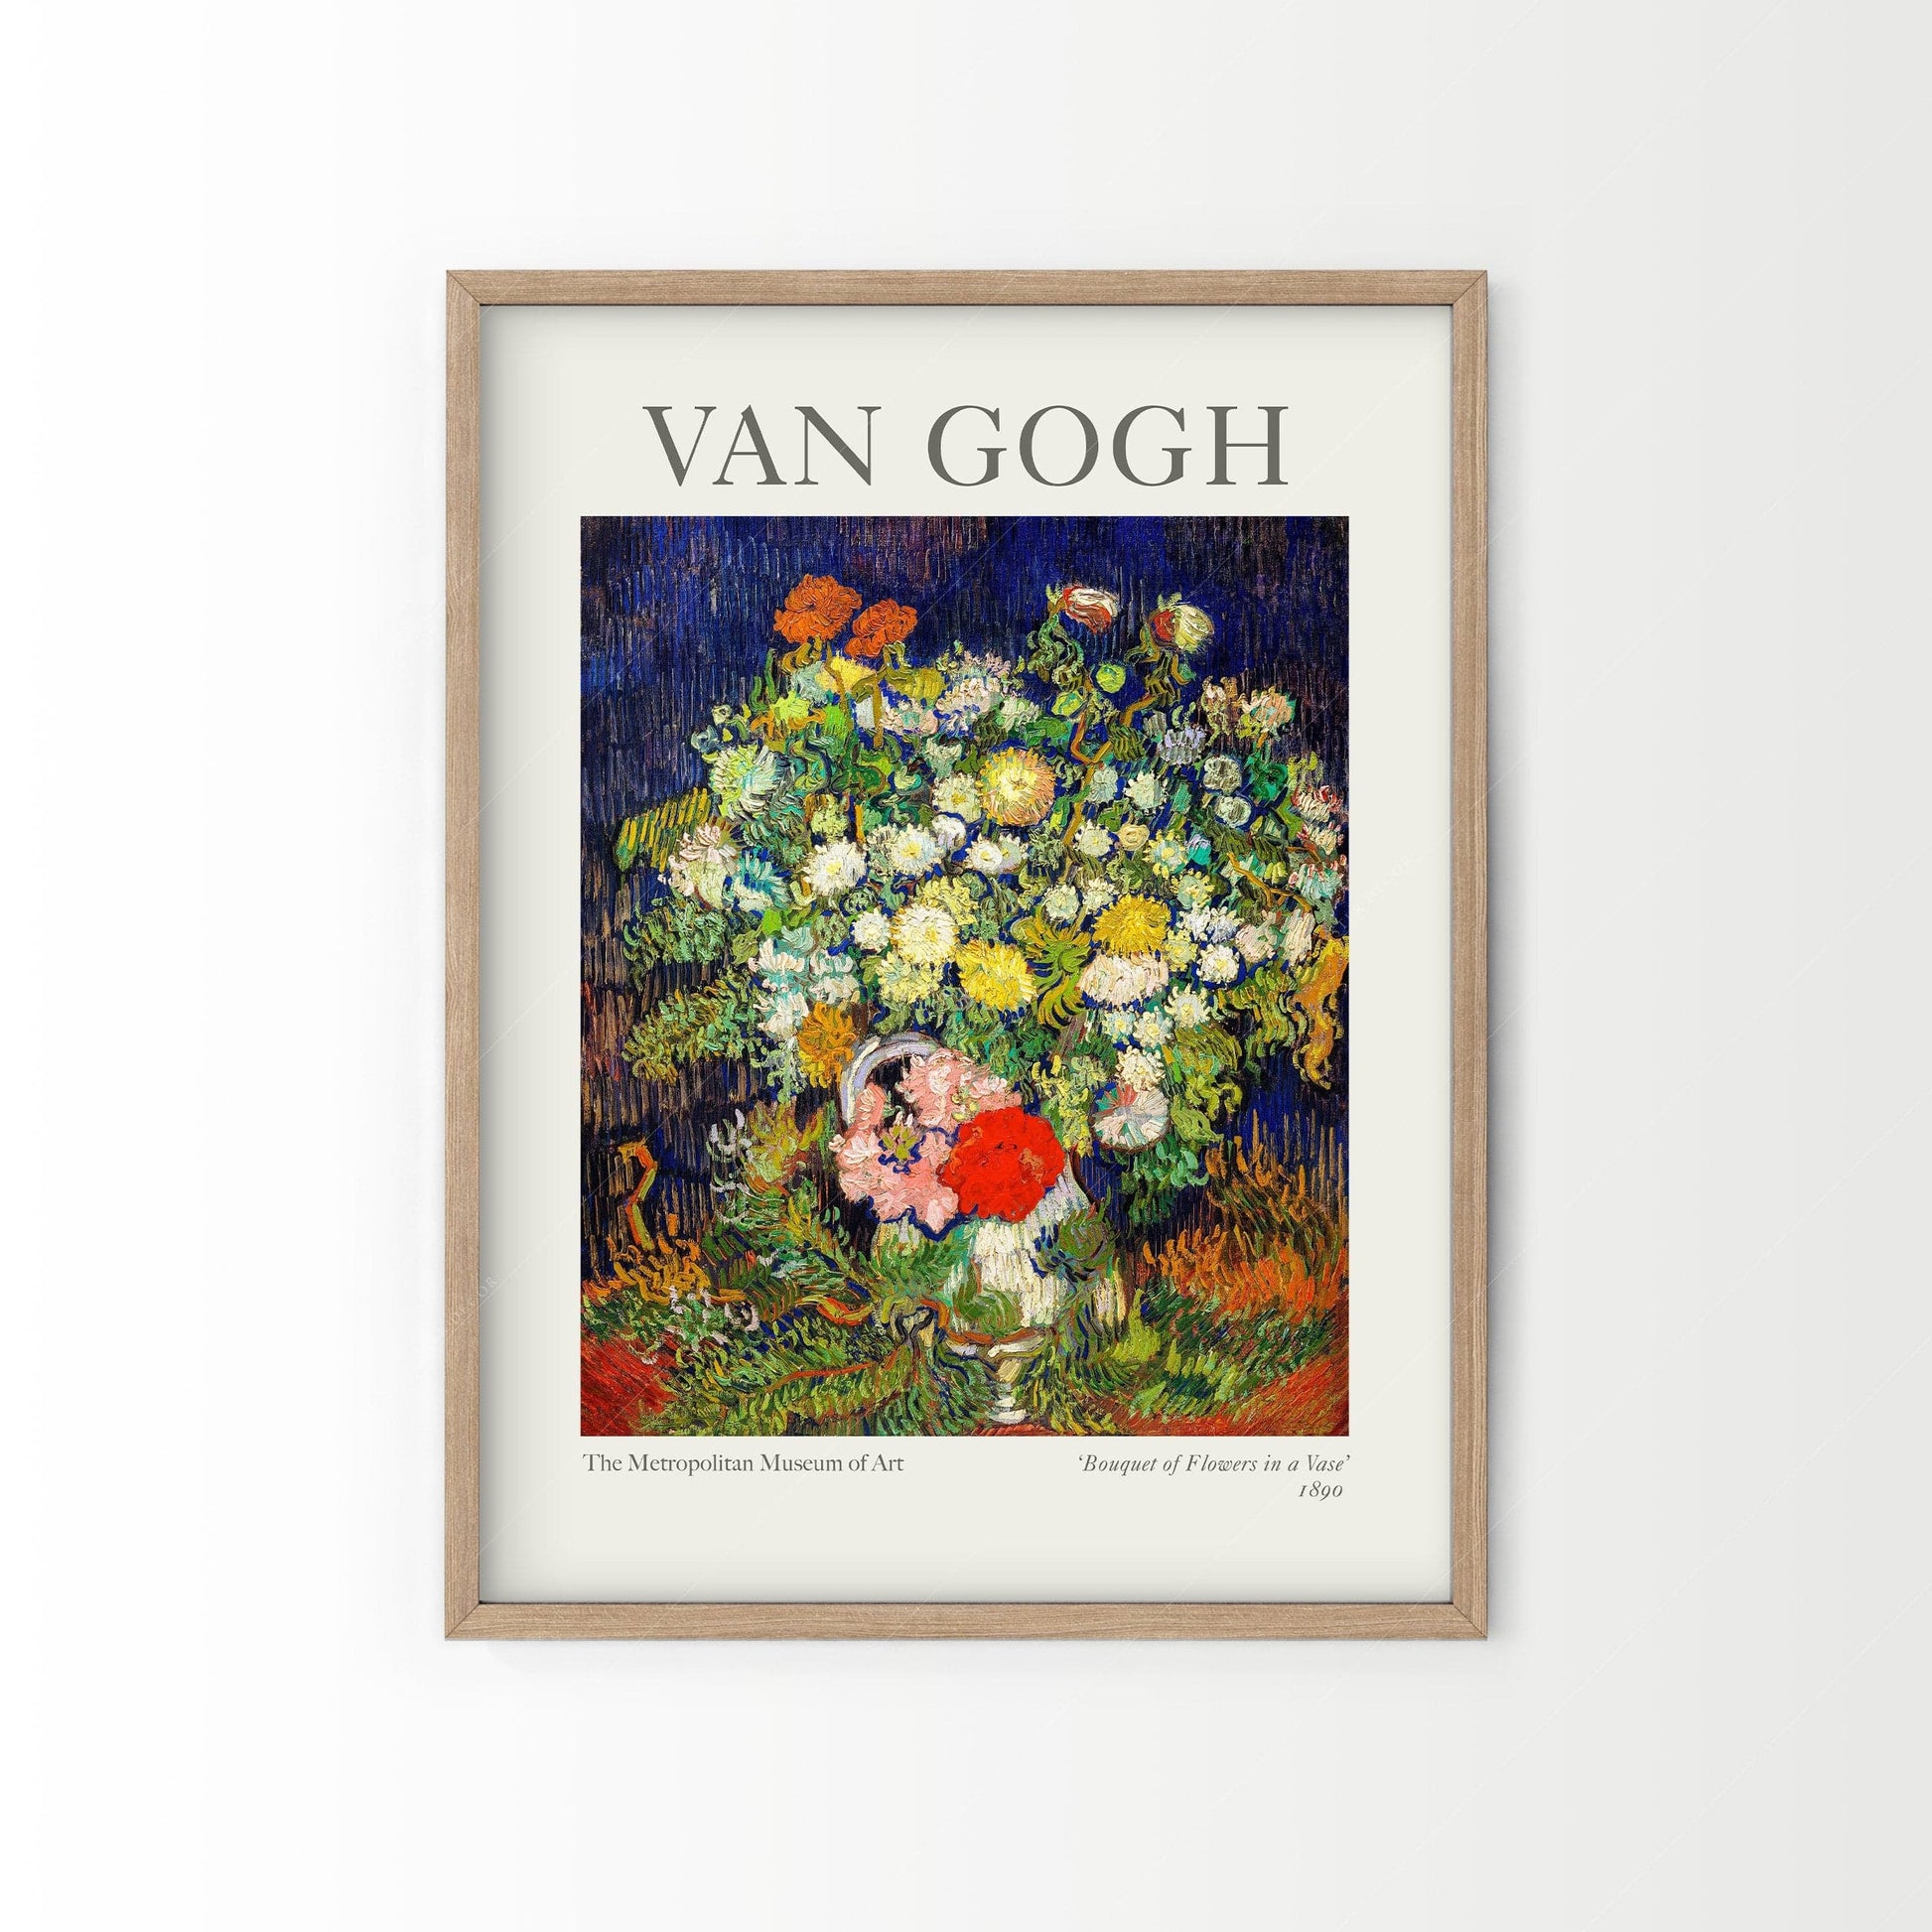 Home Poster Decor Set of 2 Van Gogh print set of 2, Van Gogh Exhibition Poster, Van Gogh Self Portrait, Living Wall Decor, Gift Idea, Office Wall Decor